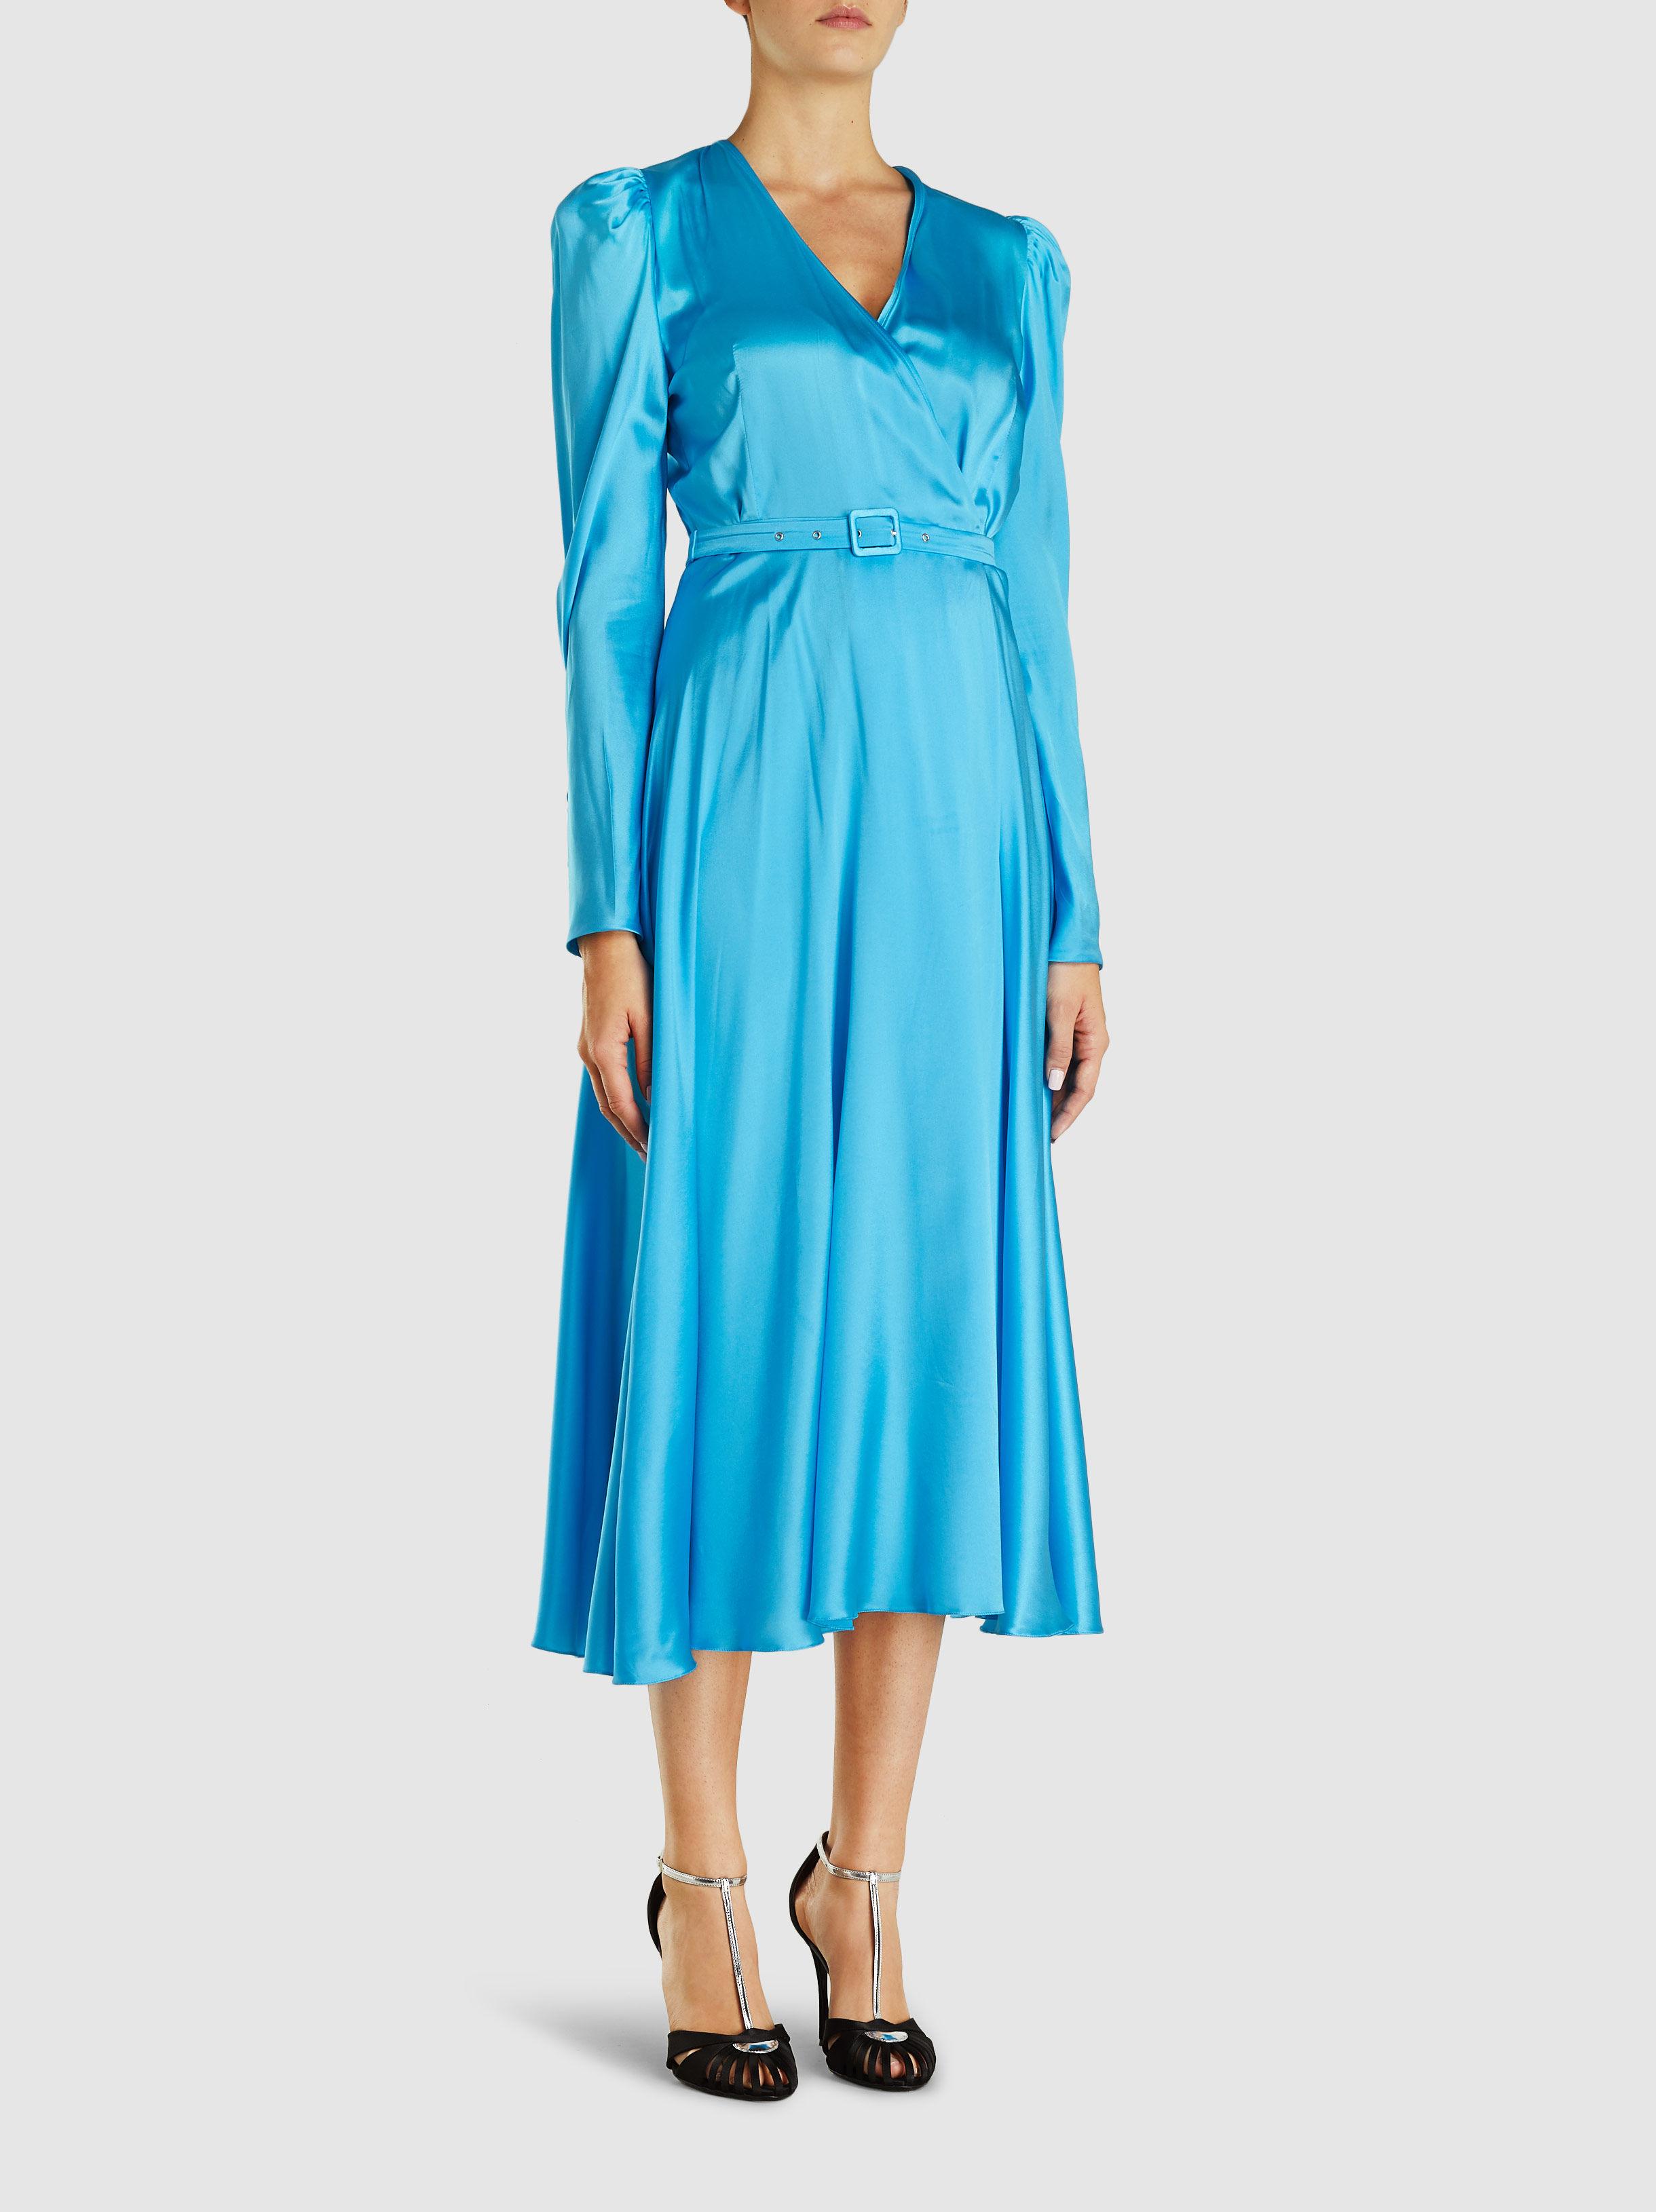 Anna October Belted Satin Midi Dress in Light Blue (Blue) - Lyst